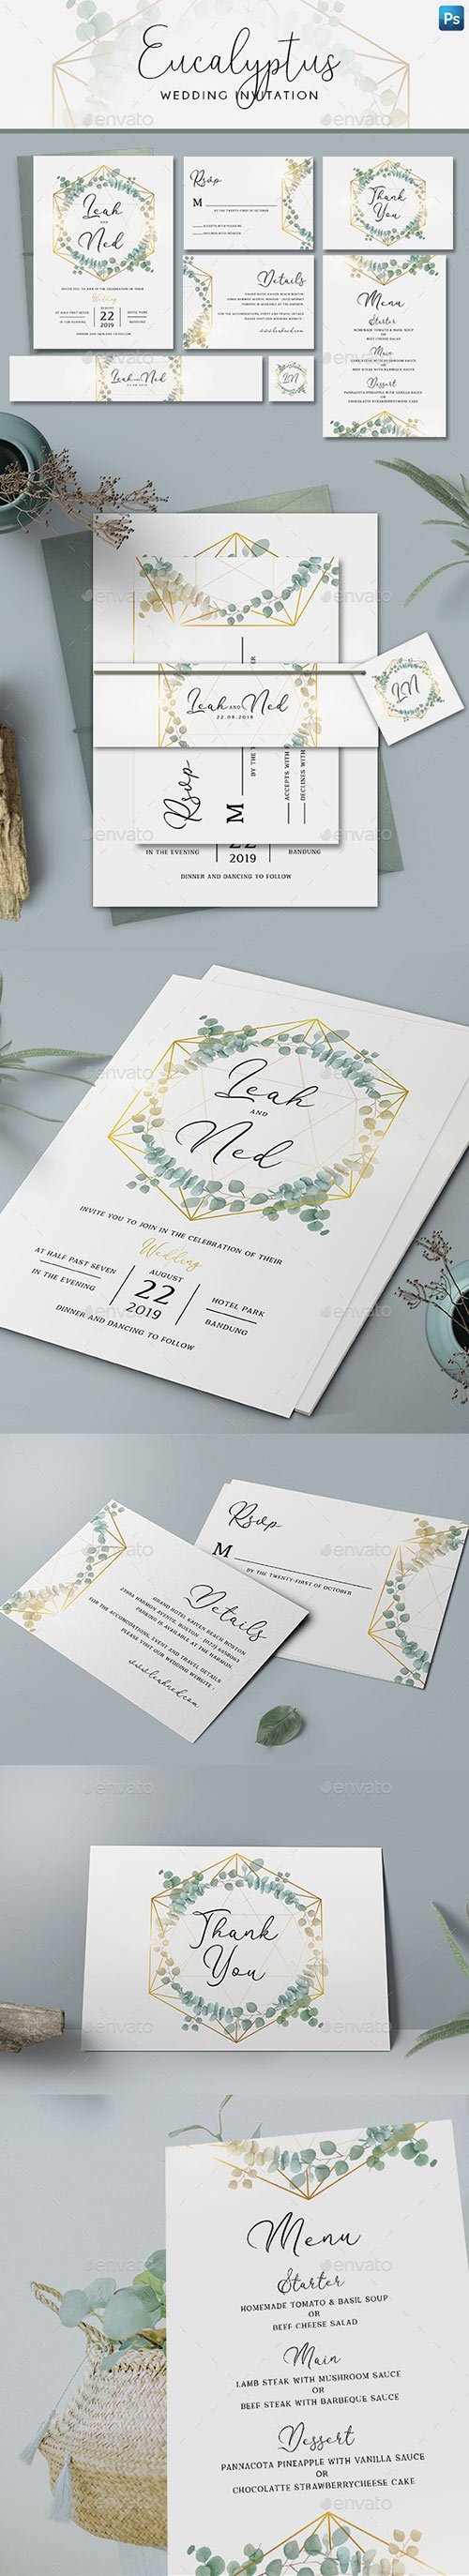 Graphicriver - Geometric Eucalyptus Wedding Invitation 22851504